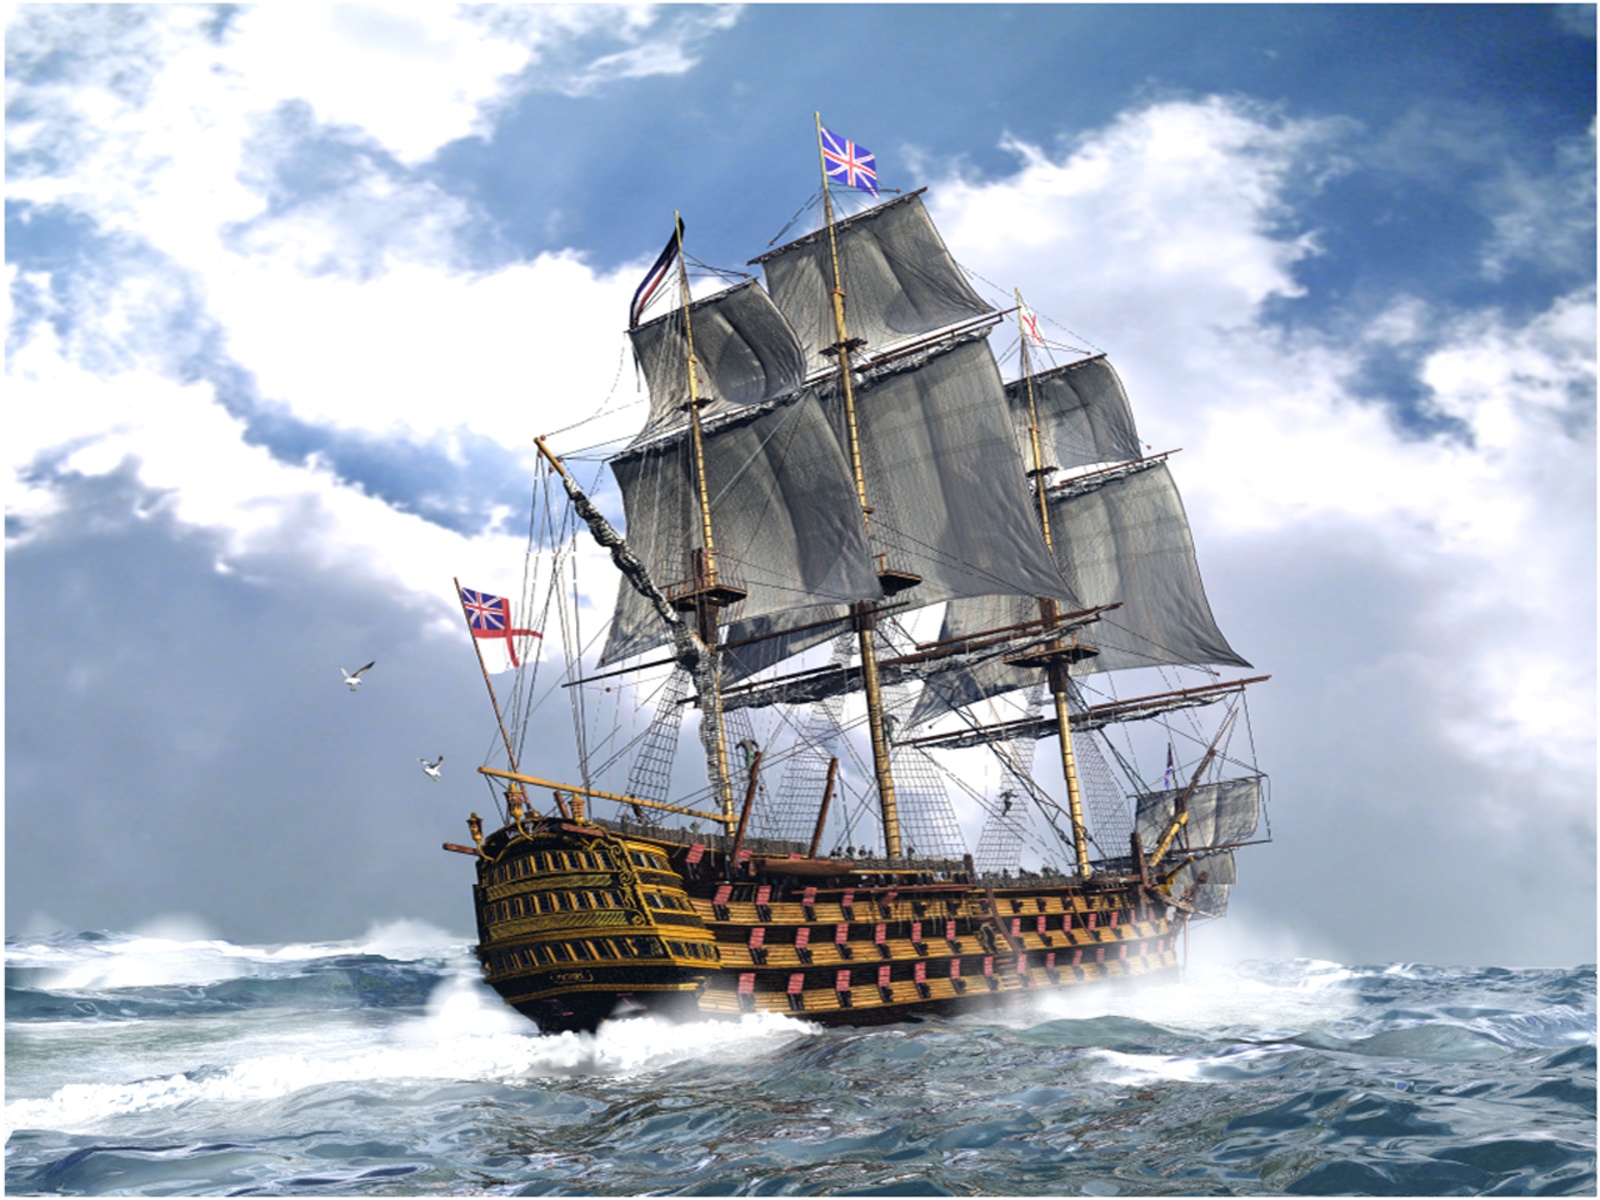  decoration 3D Sailing Ship 1600 x 1200 Pixel HD Wallpapers 1600x1200